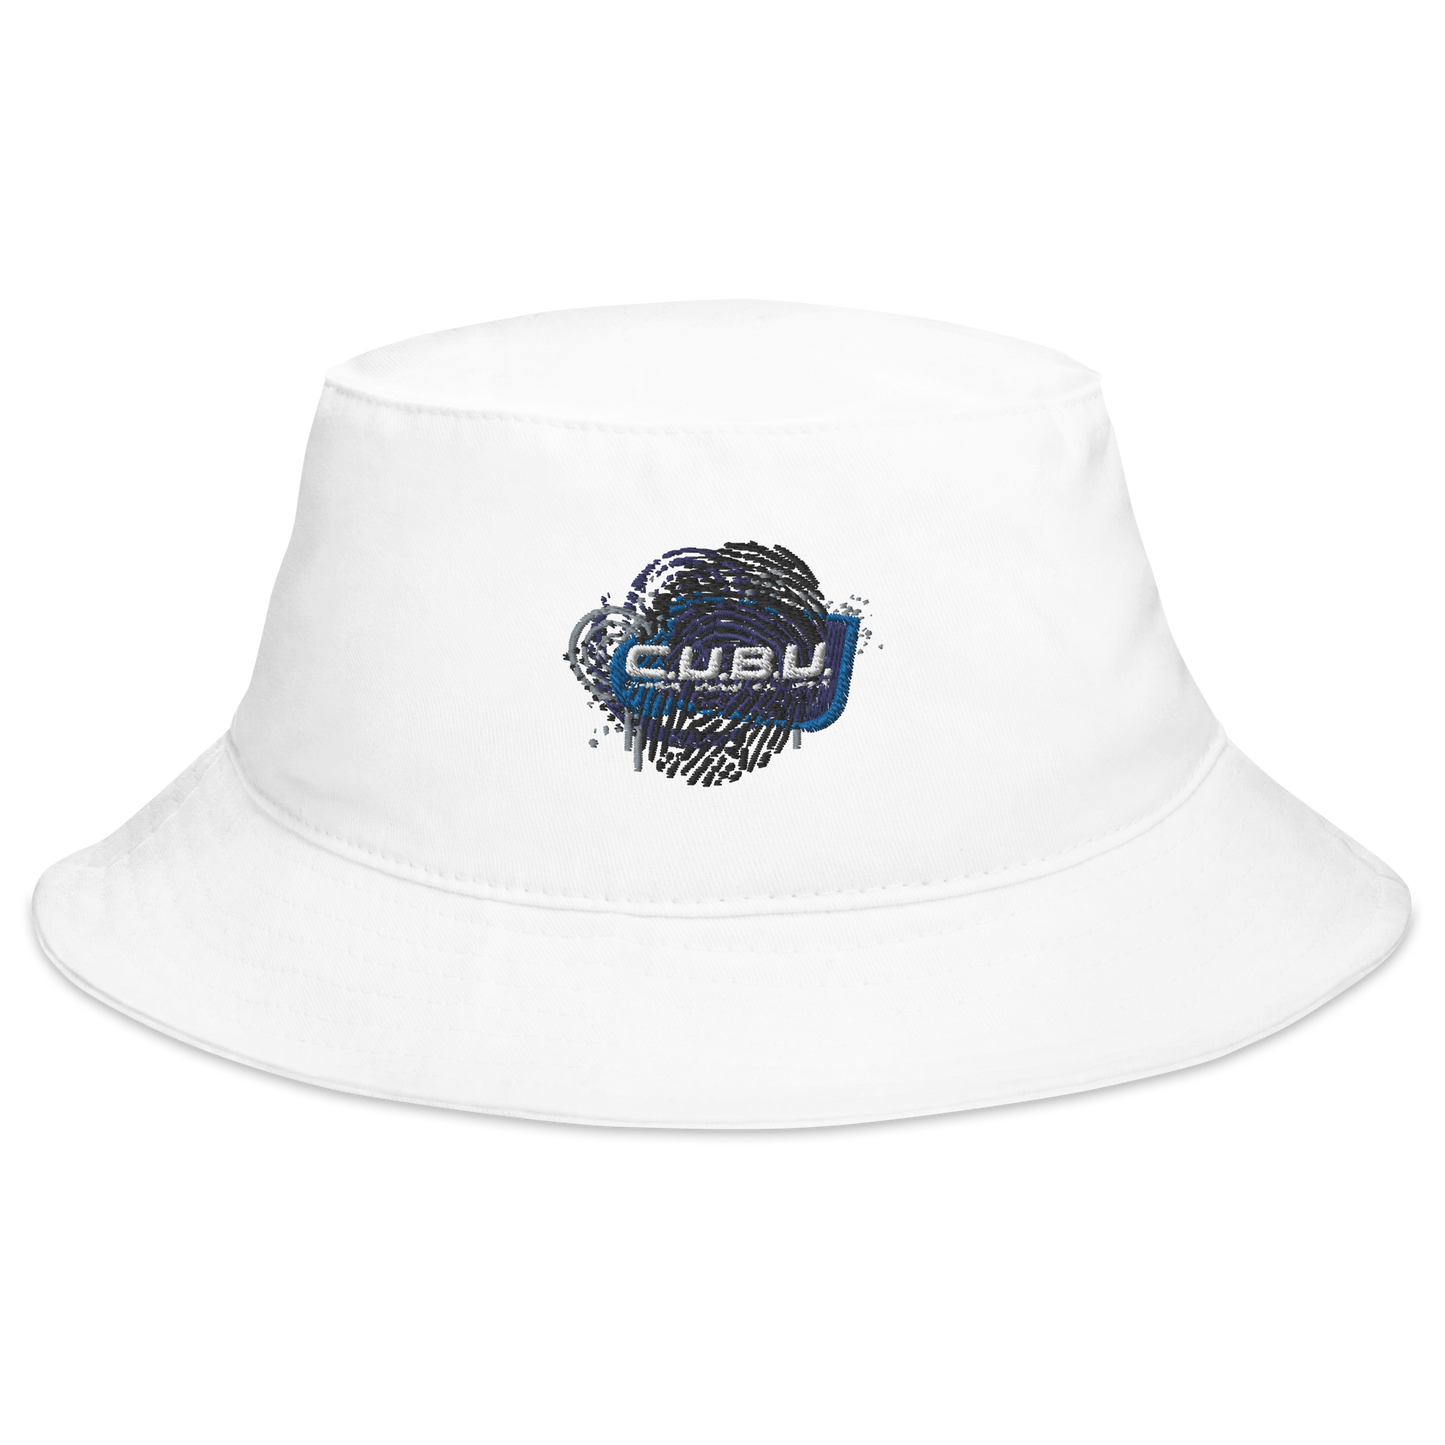 C.U.B.U. Bucket Hat